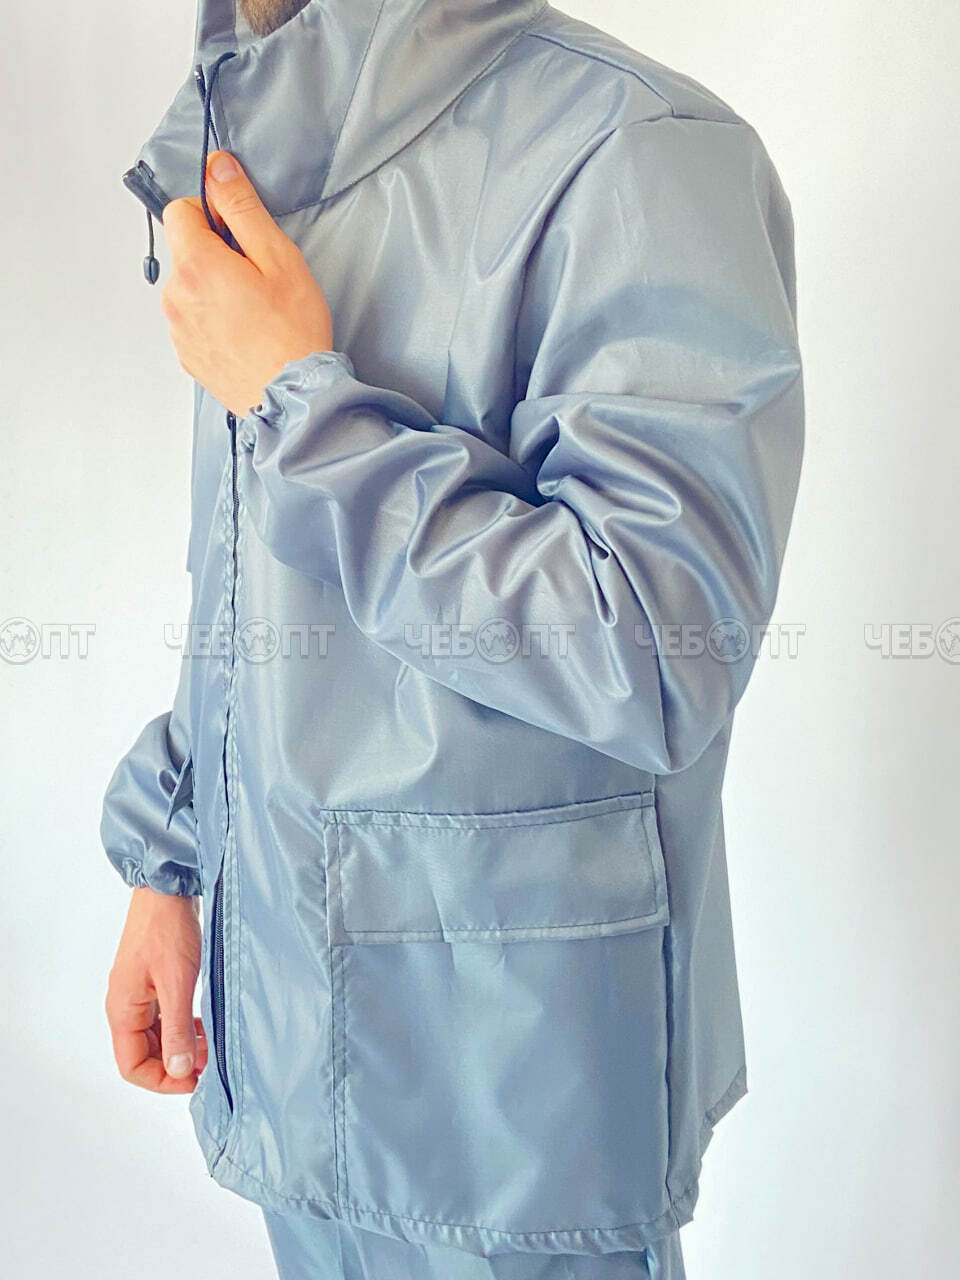 Костюм-дождевик (куртка, брюки),ЧЕБПРО,размер 52-54,100% полиэстер, Арт. ДожКостМуж/серый, МПС [3/15] СобПр. ЧЕБОПТ.